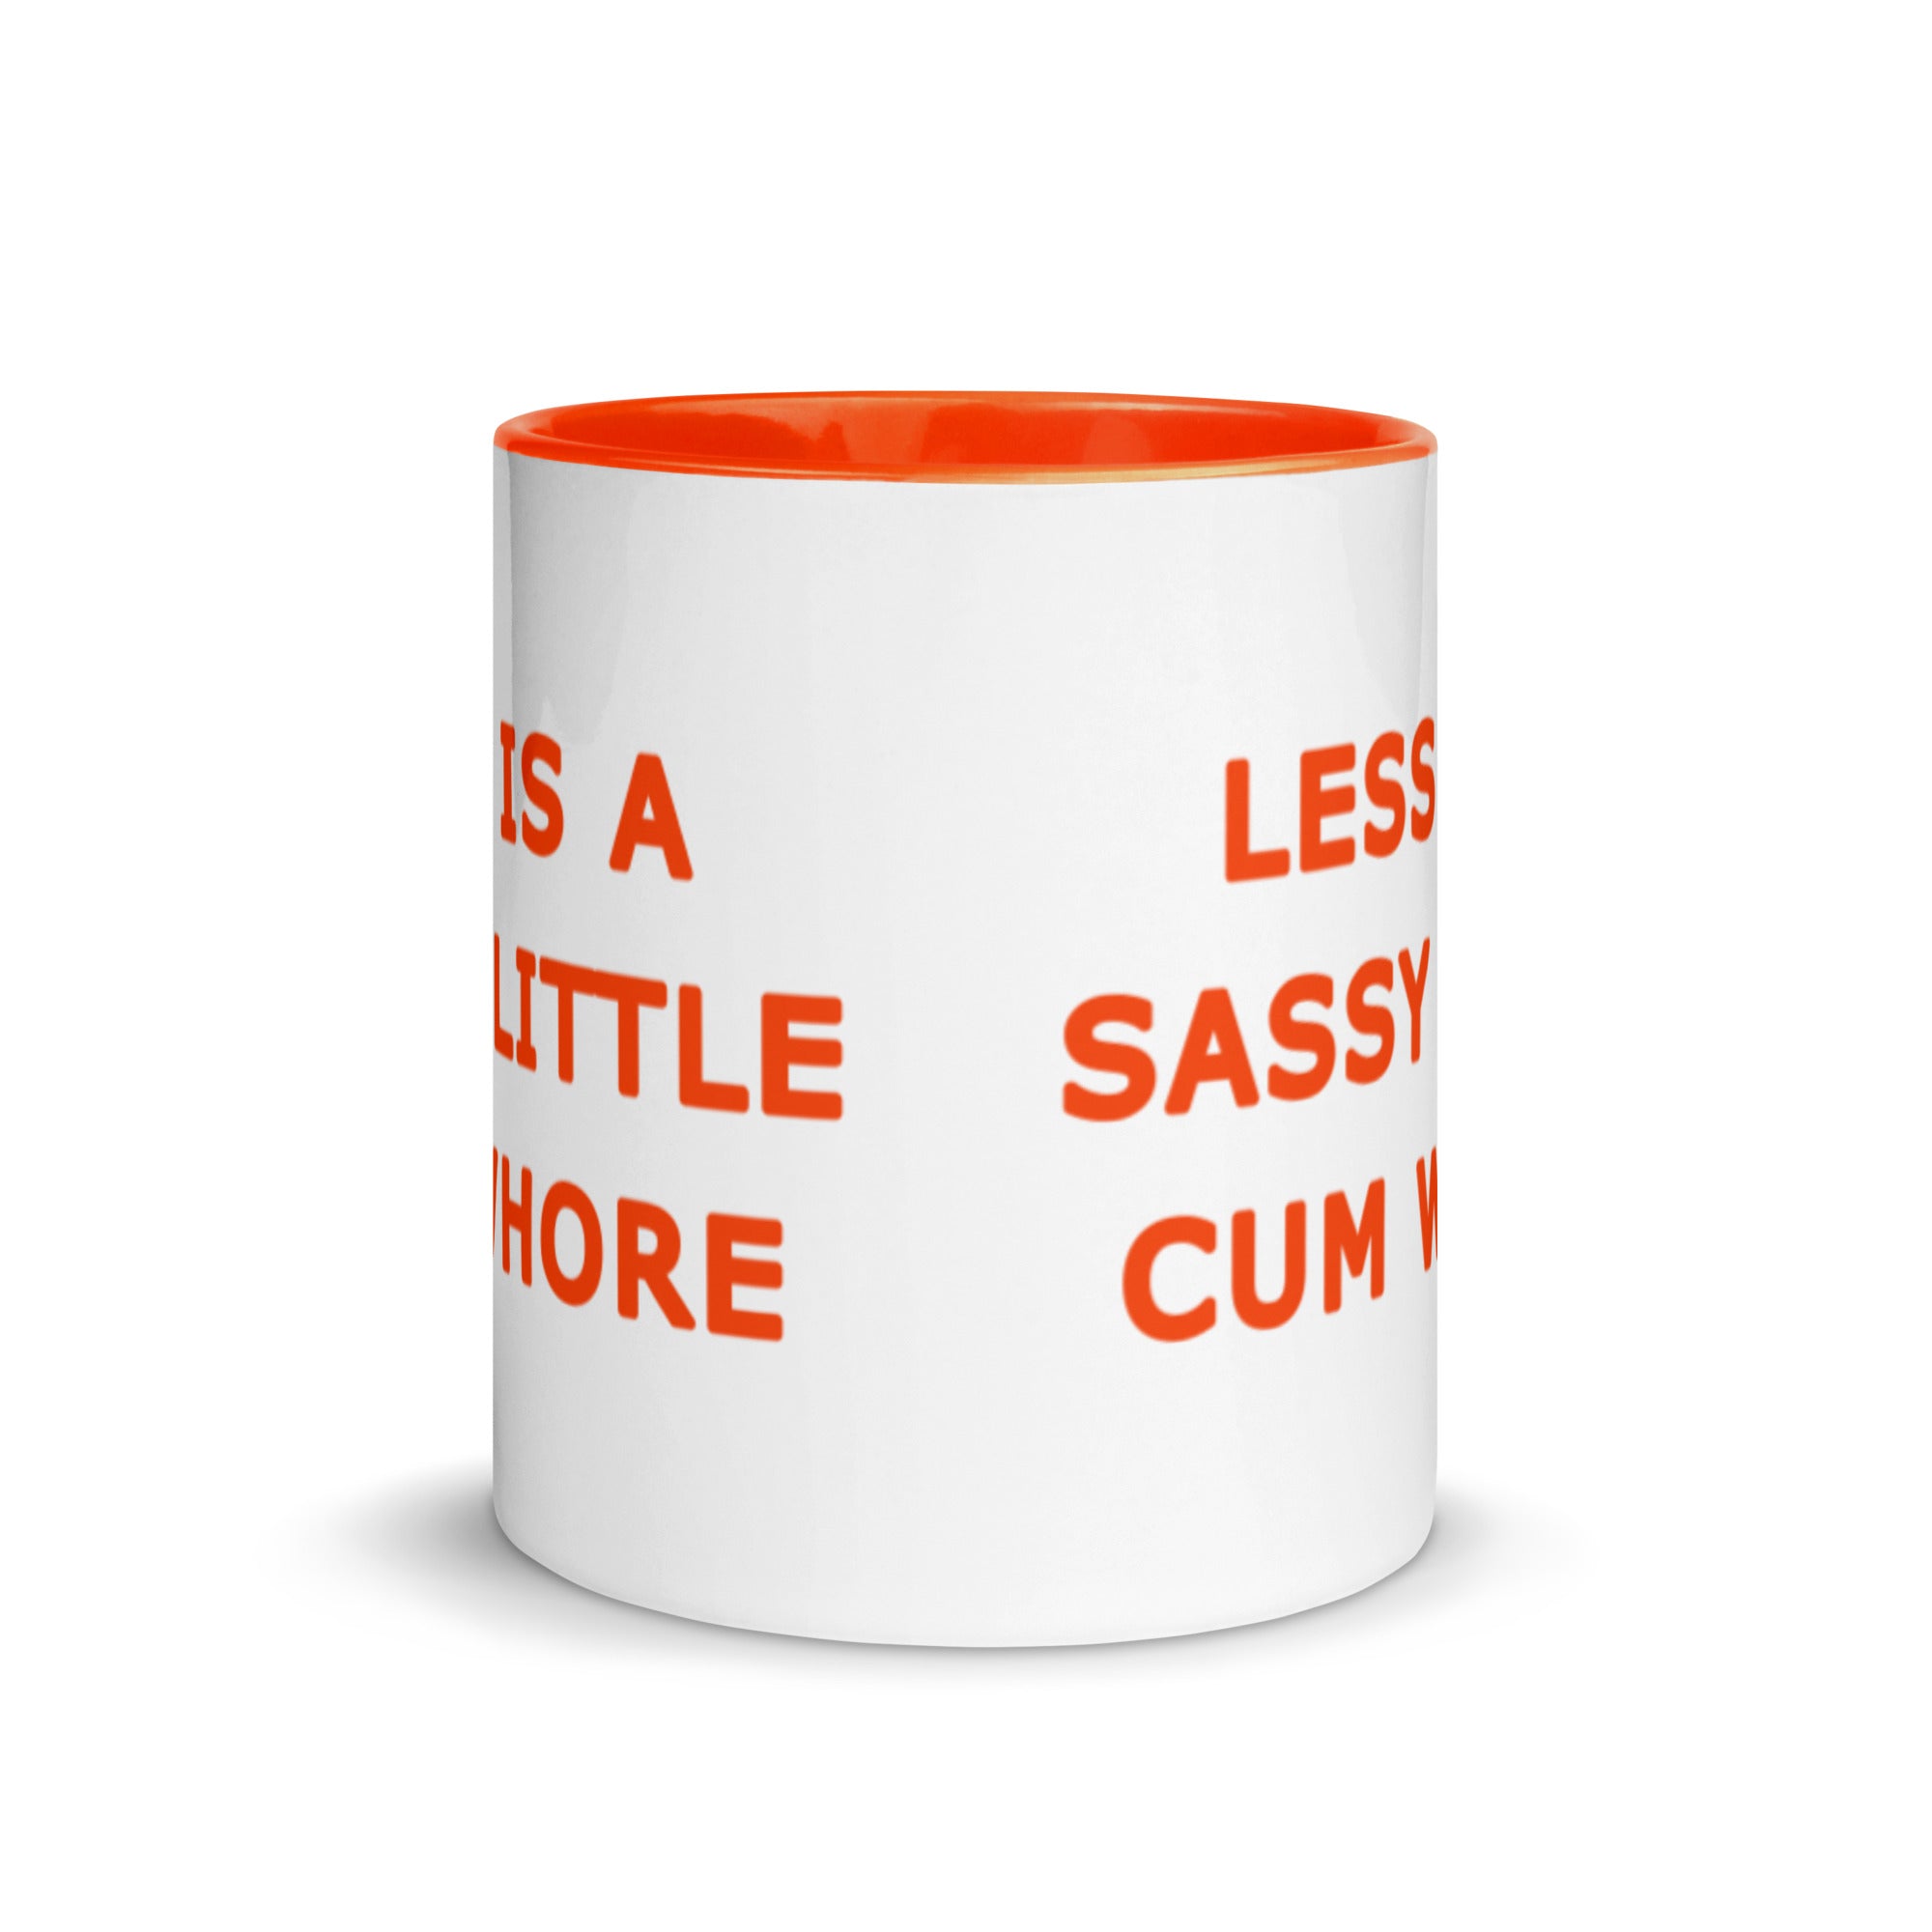 Less is a Sassy Little Cum Whore Blue, Orange, Pink, Black Or Yellow Mug